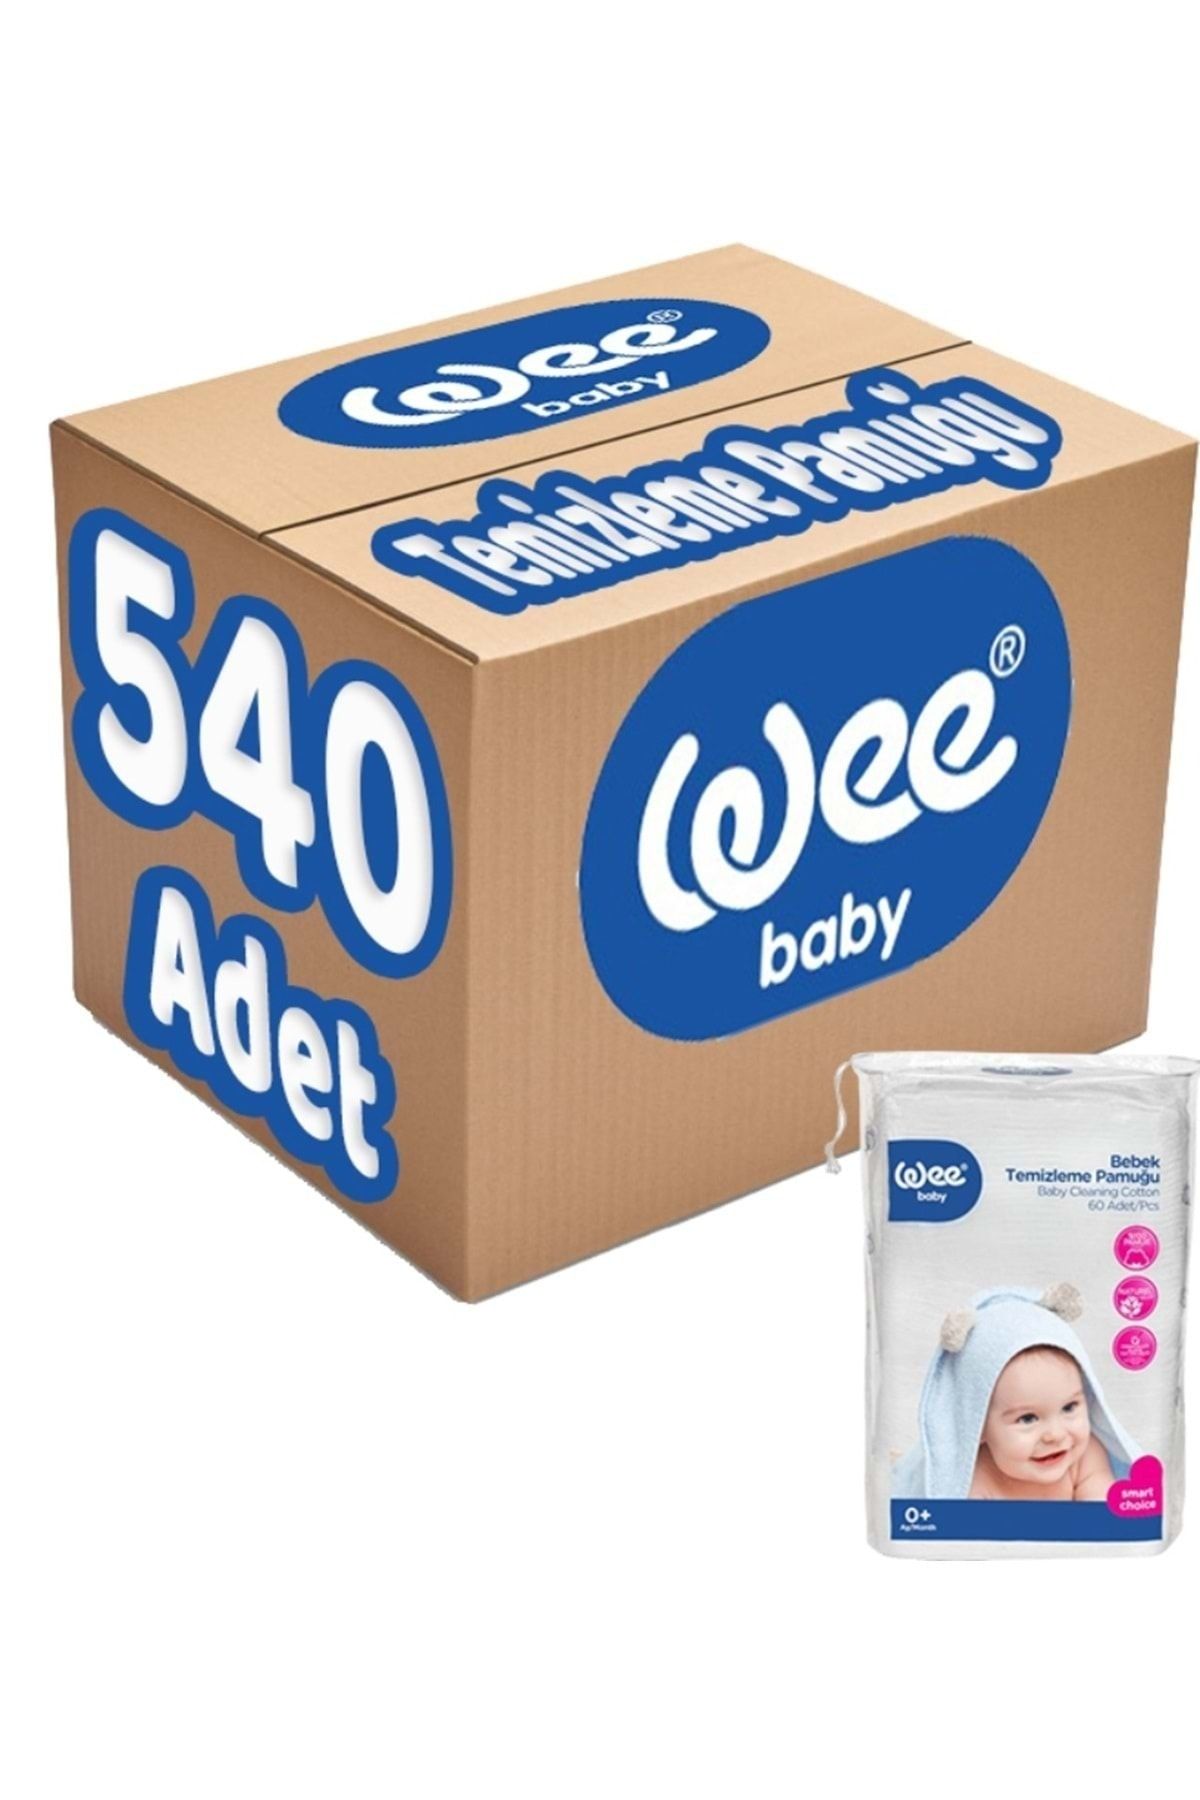 Wee Baby Bebek Temizleme Pamuğu 540 Adet (9pk*60)